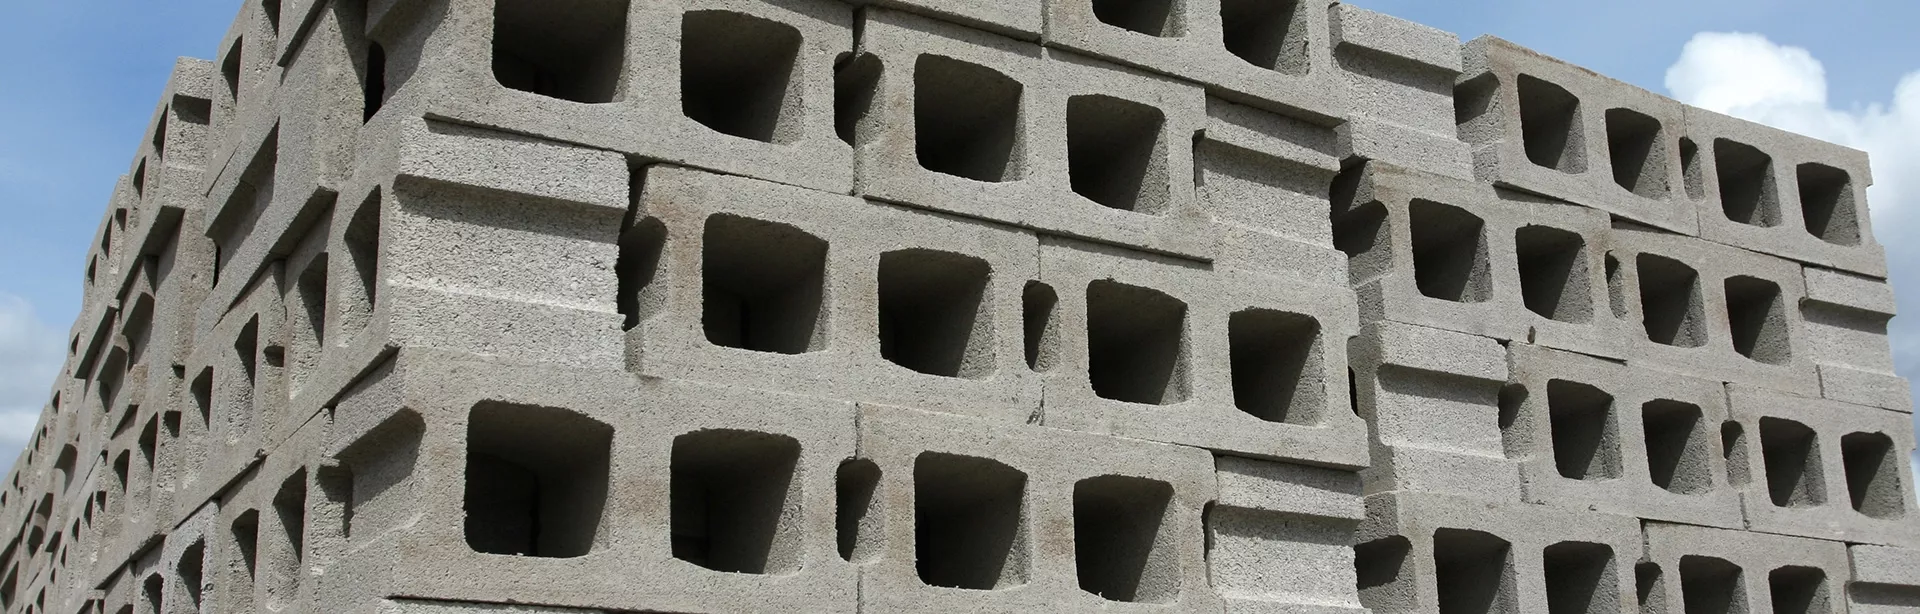 beton budowlany bloki